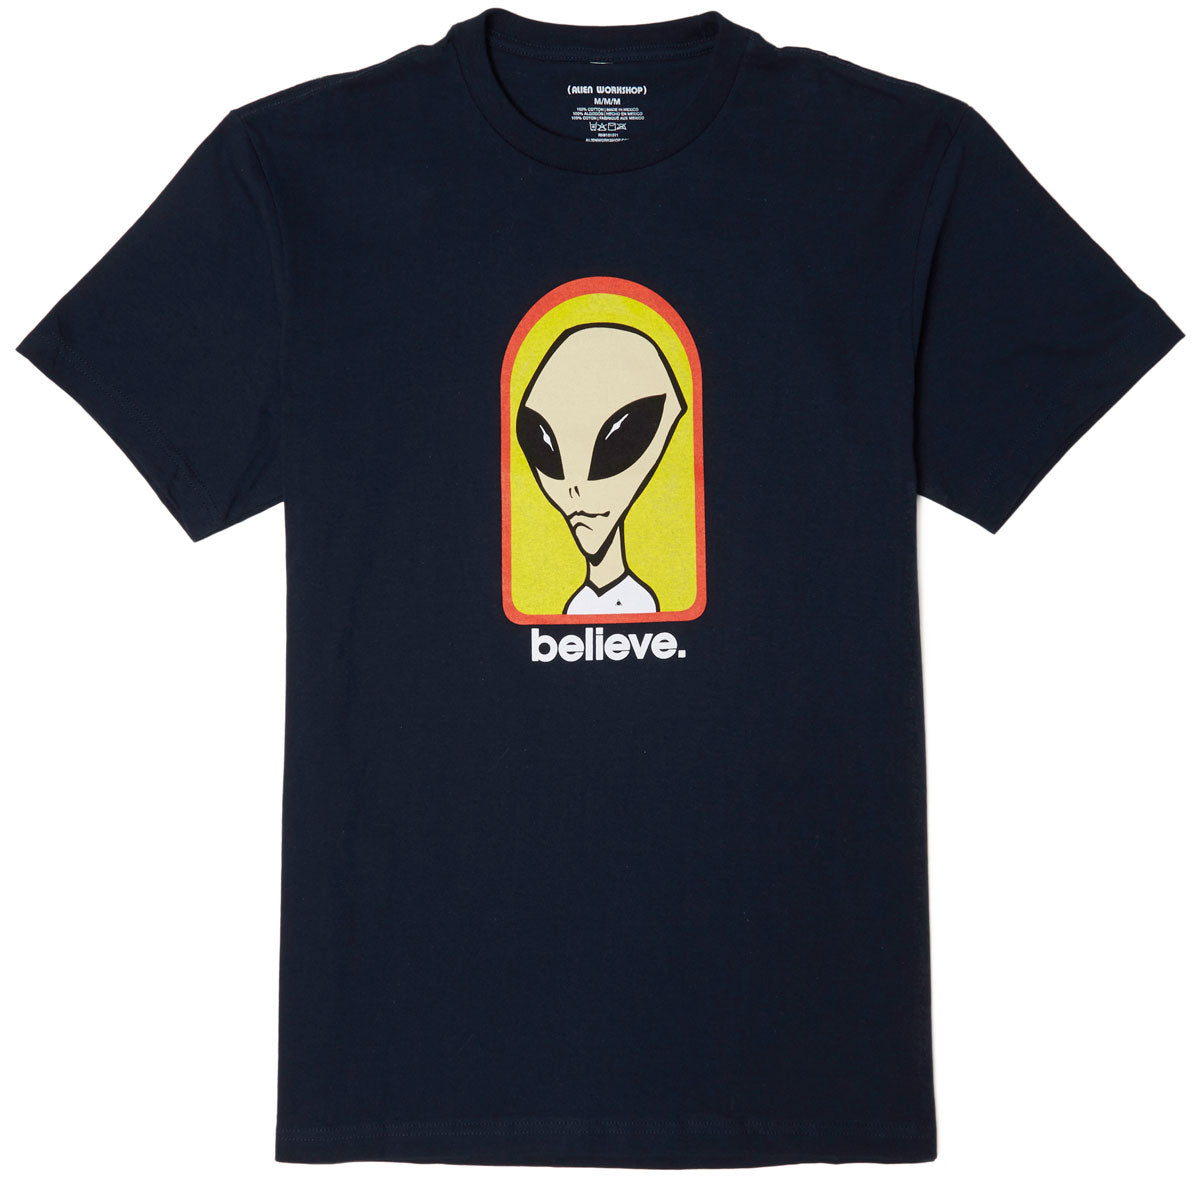 Alien Workshop Believe T-Shirt - Navy image 1